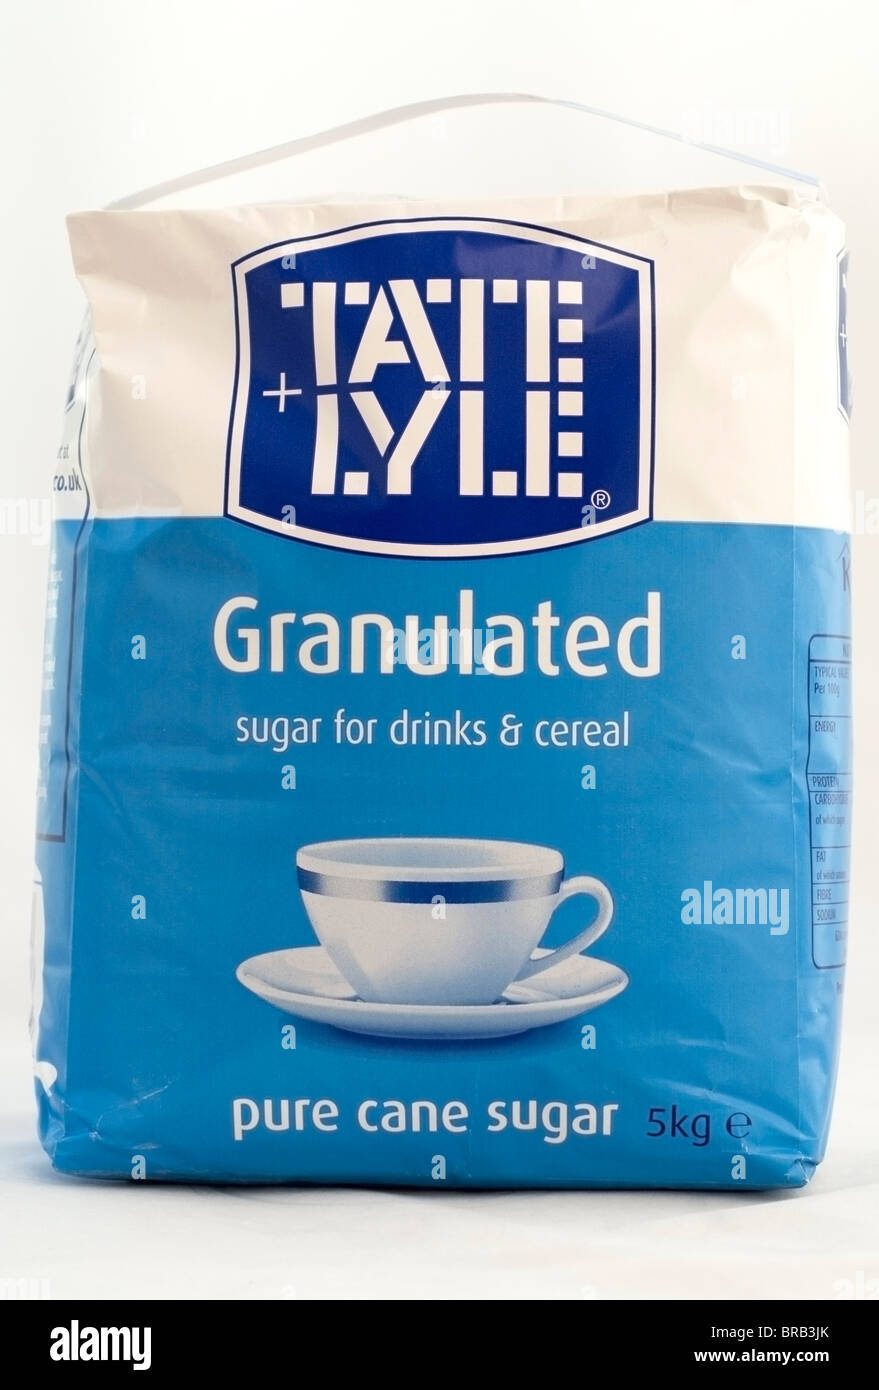 Tate & Lyle Sugar Stock Photo